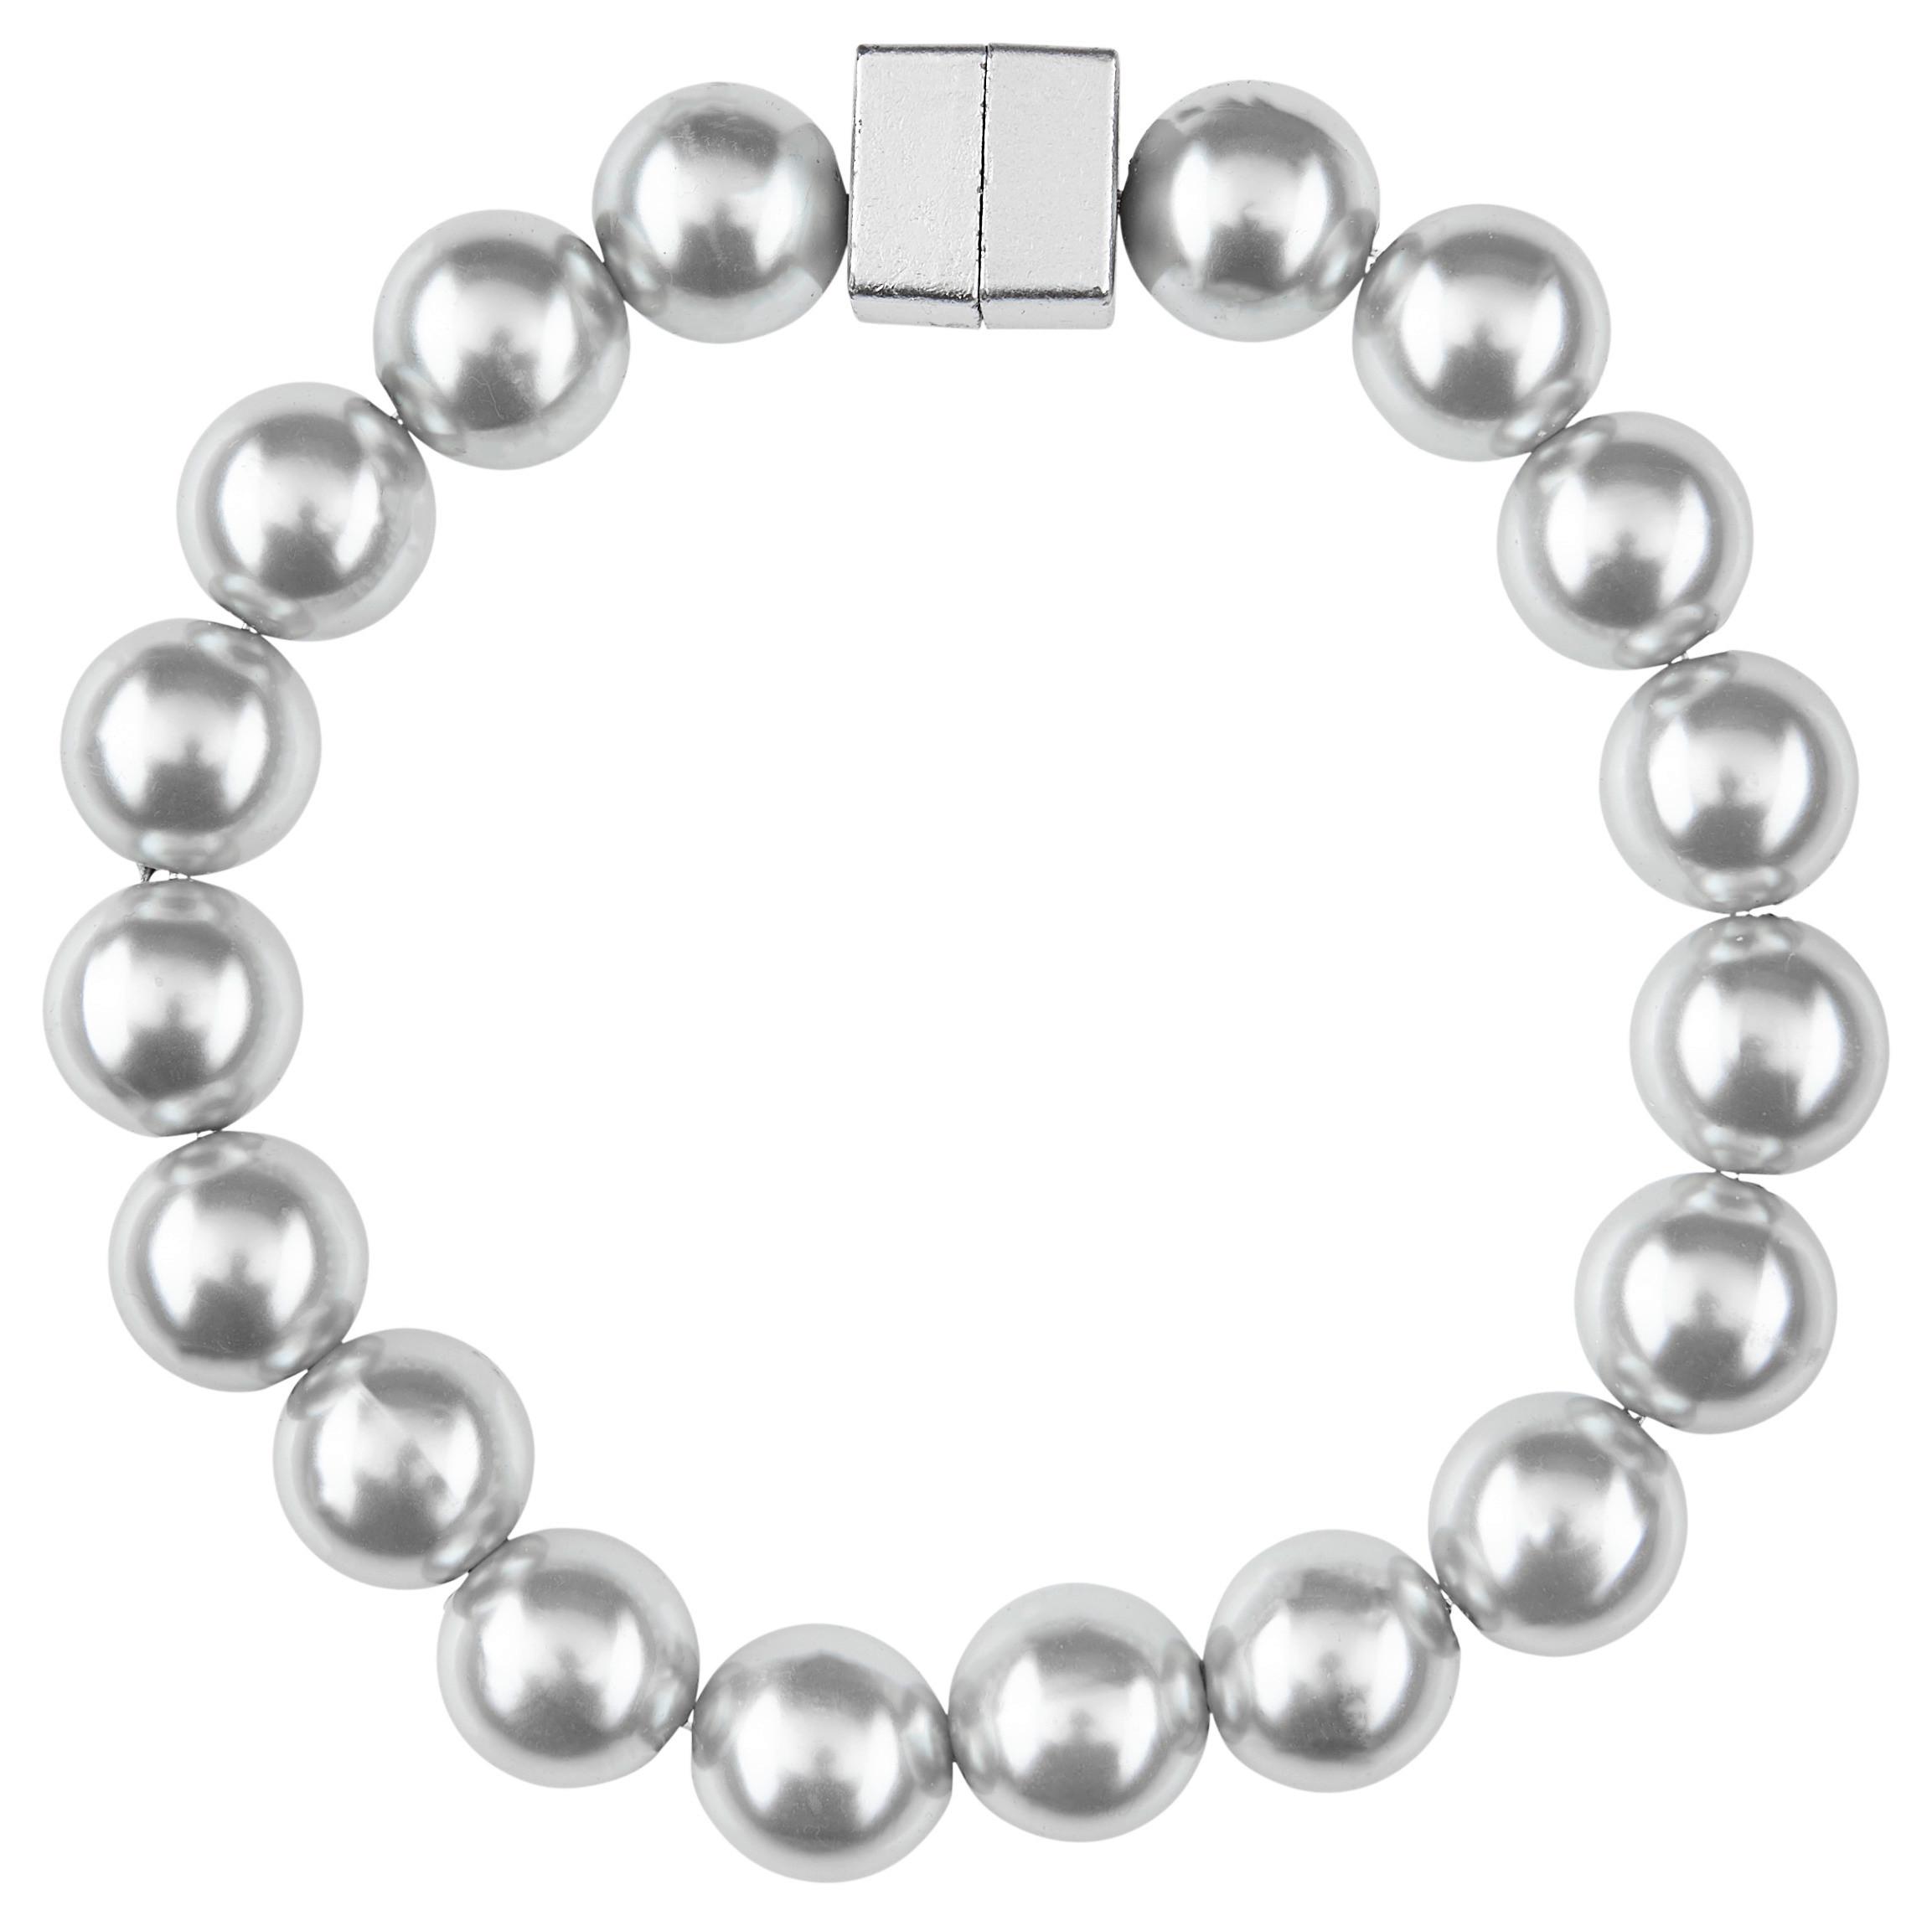 Kopča Za Zavjese Perlenkette - srebrne boje, Romantik / Landhaus, plastika (29cm) - Modern Living